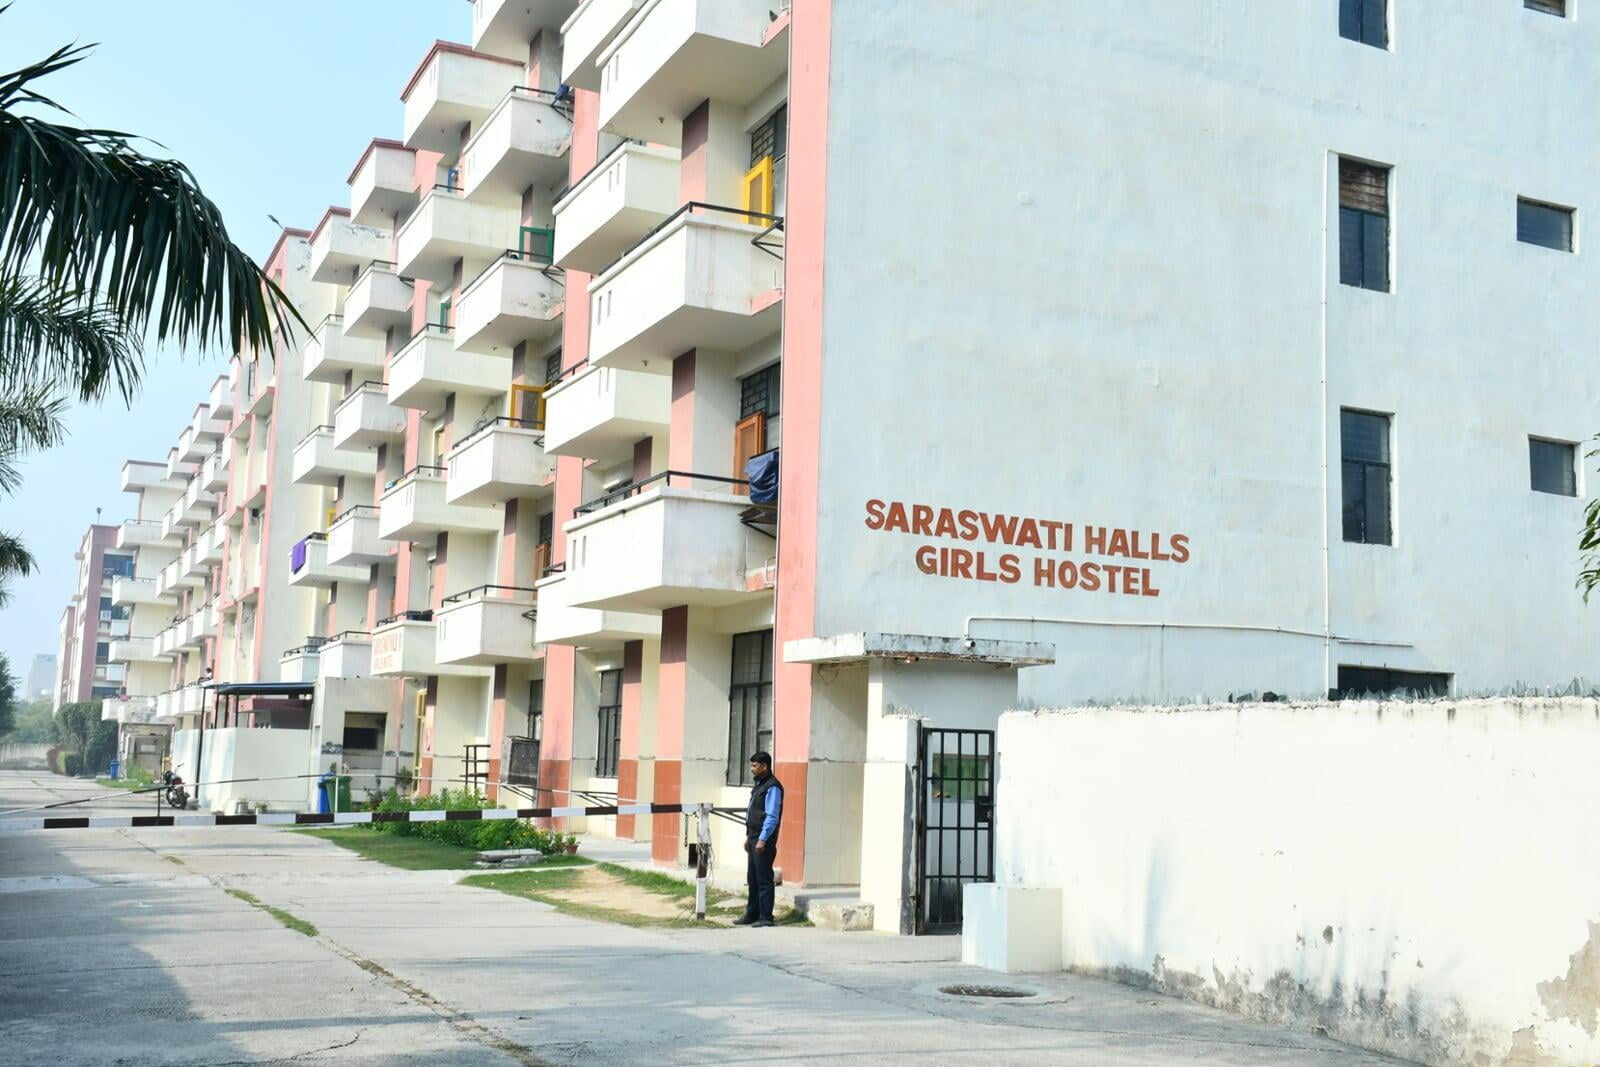 Girls Hostel ITS Engineering College